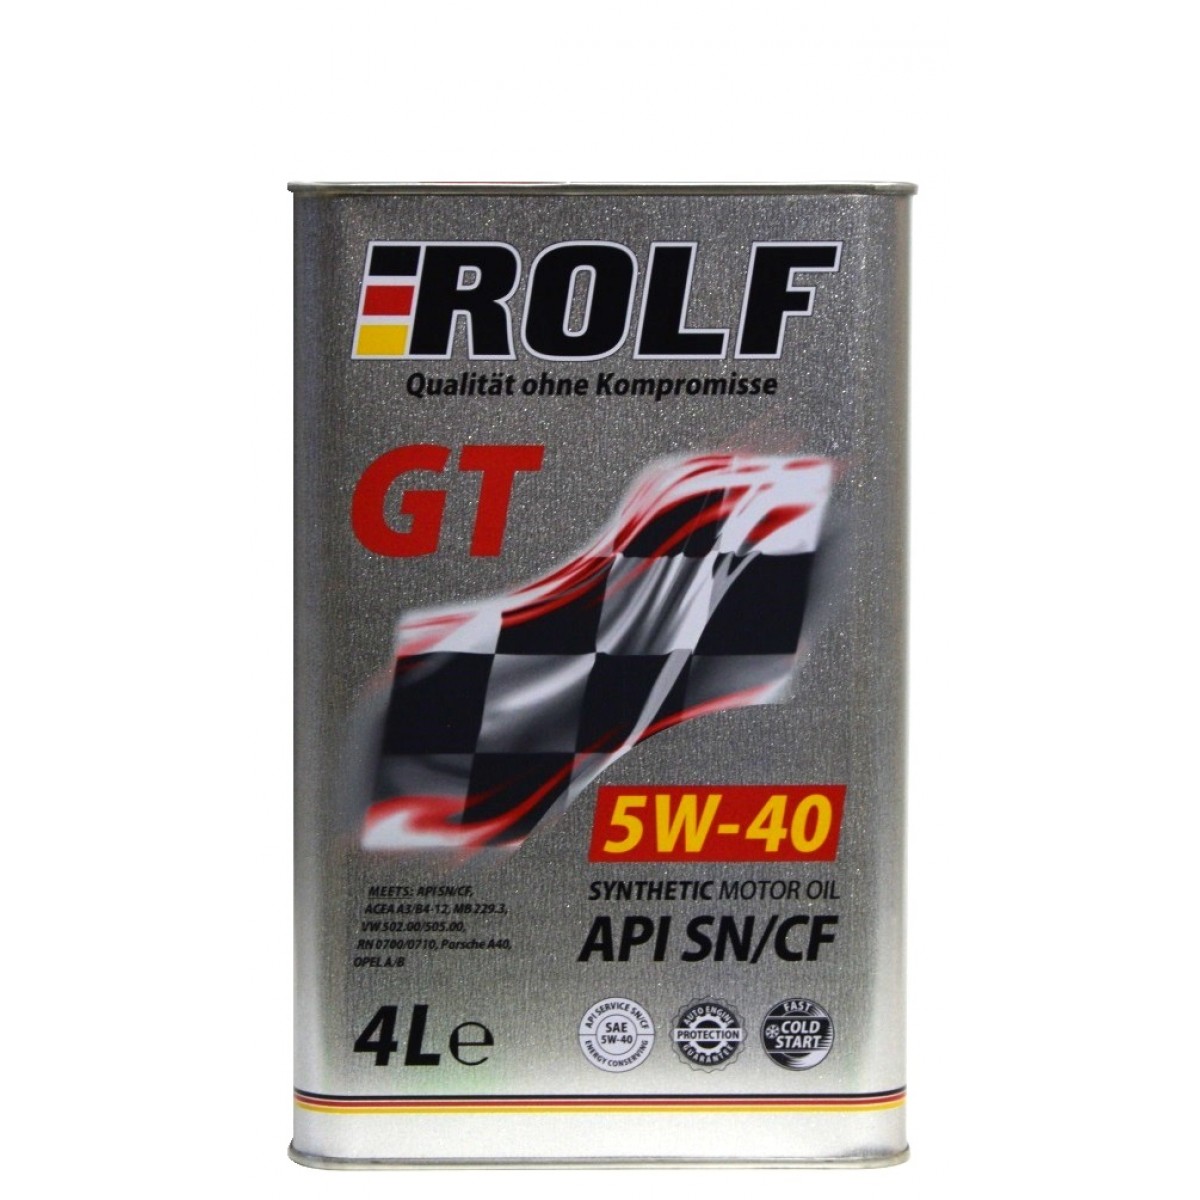 Rolf масло 4л. Rolf gt SAE 5w-40 API SN/CF Sint 4л. Rolf 5w40 gt 4л артикул. Rolf 5w40 fully Synthetic. Моторное масло Rolf gt SAE 5w-40 4л синтетическое.